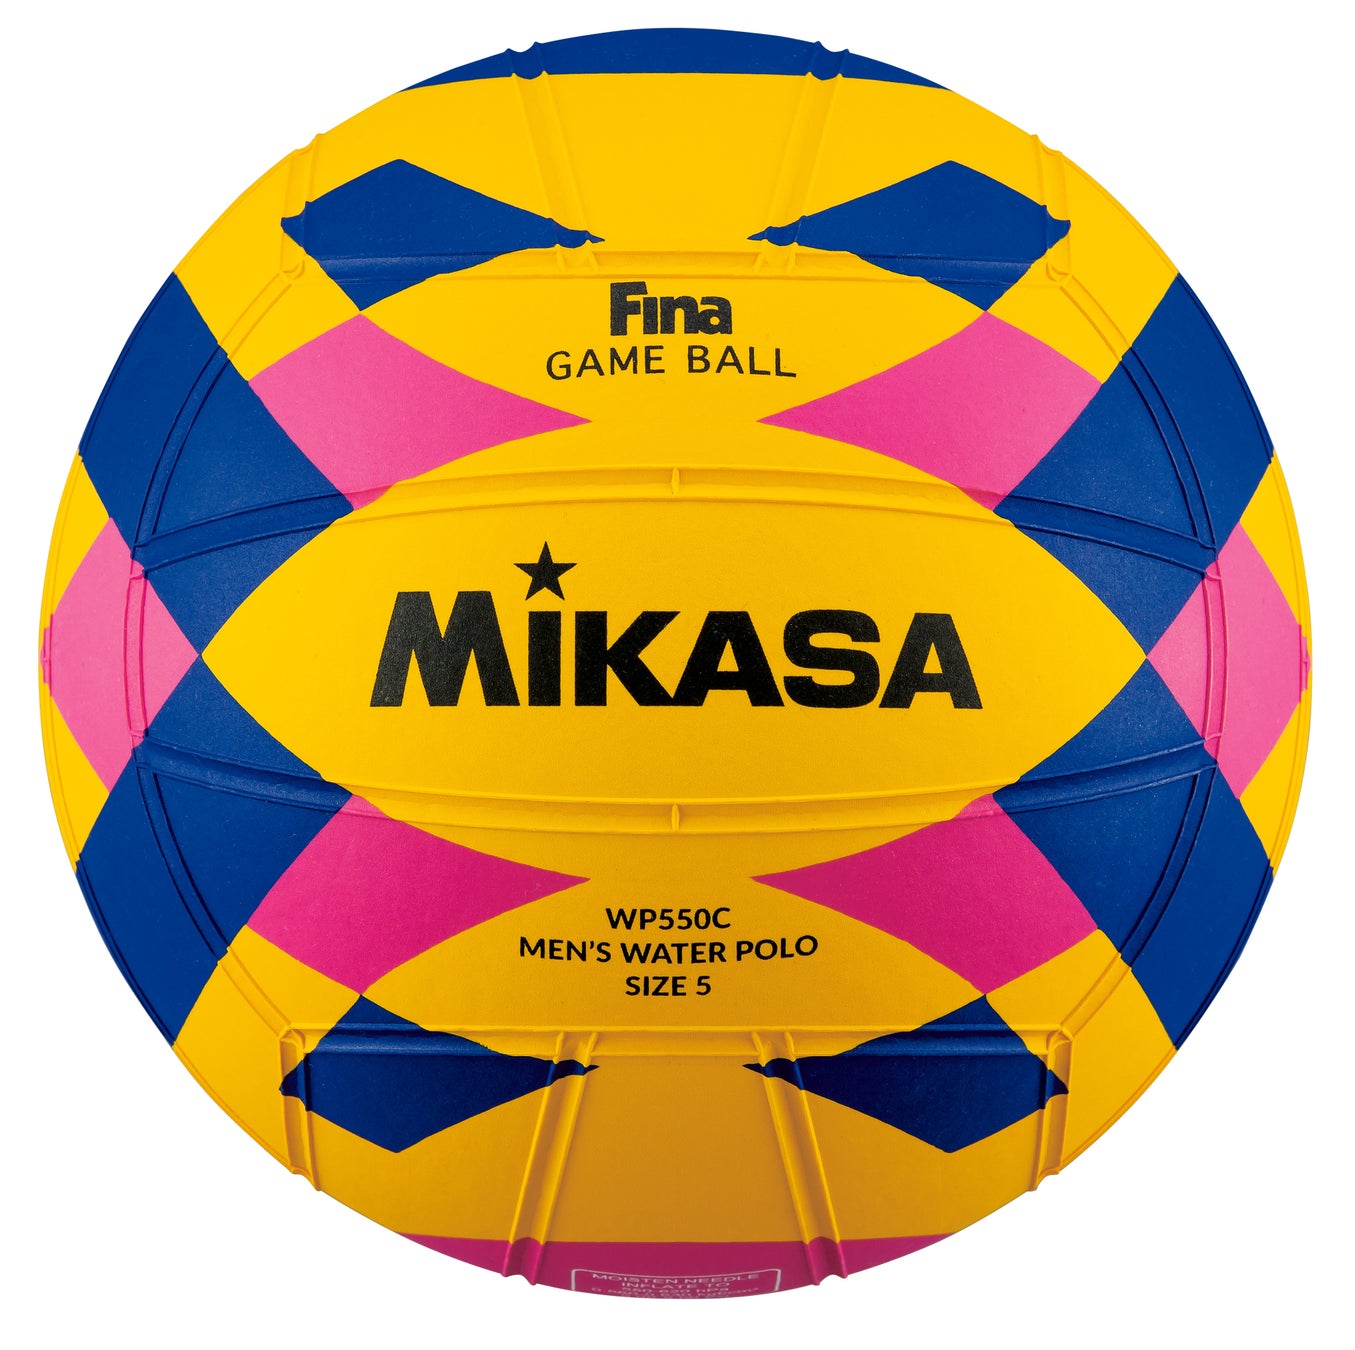 MIKASAはFINA世界選手権ブダペスト大会2022にて新水球モデルを発表しました